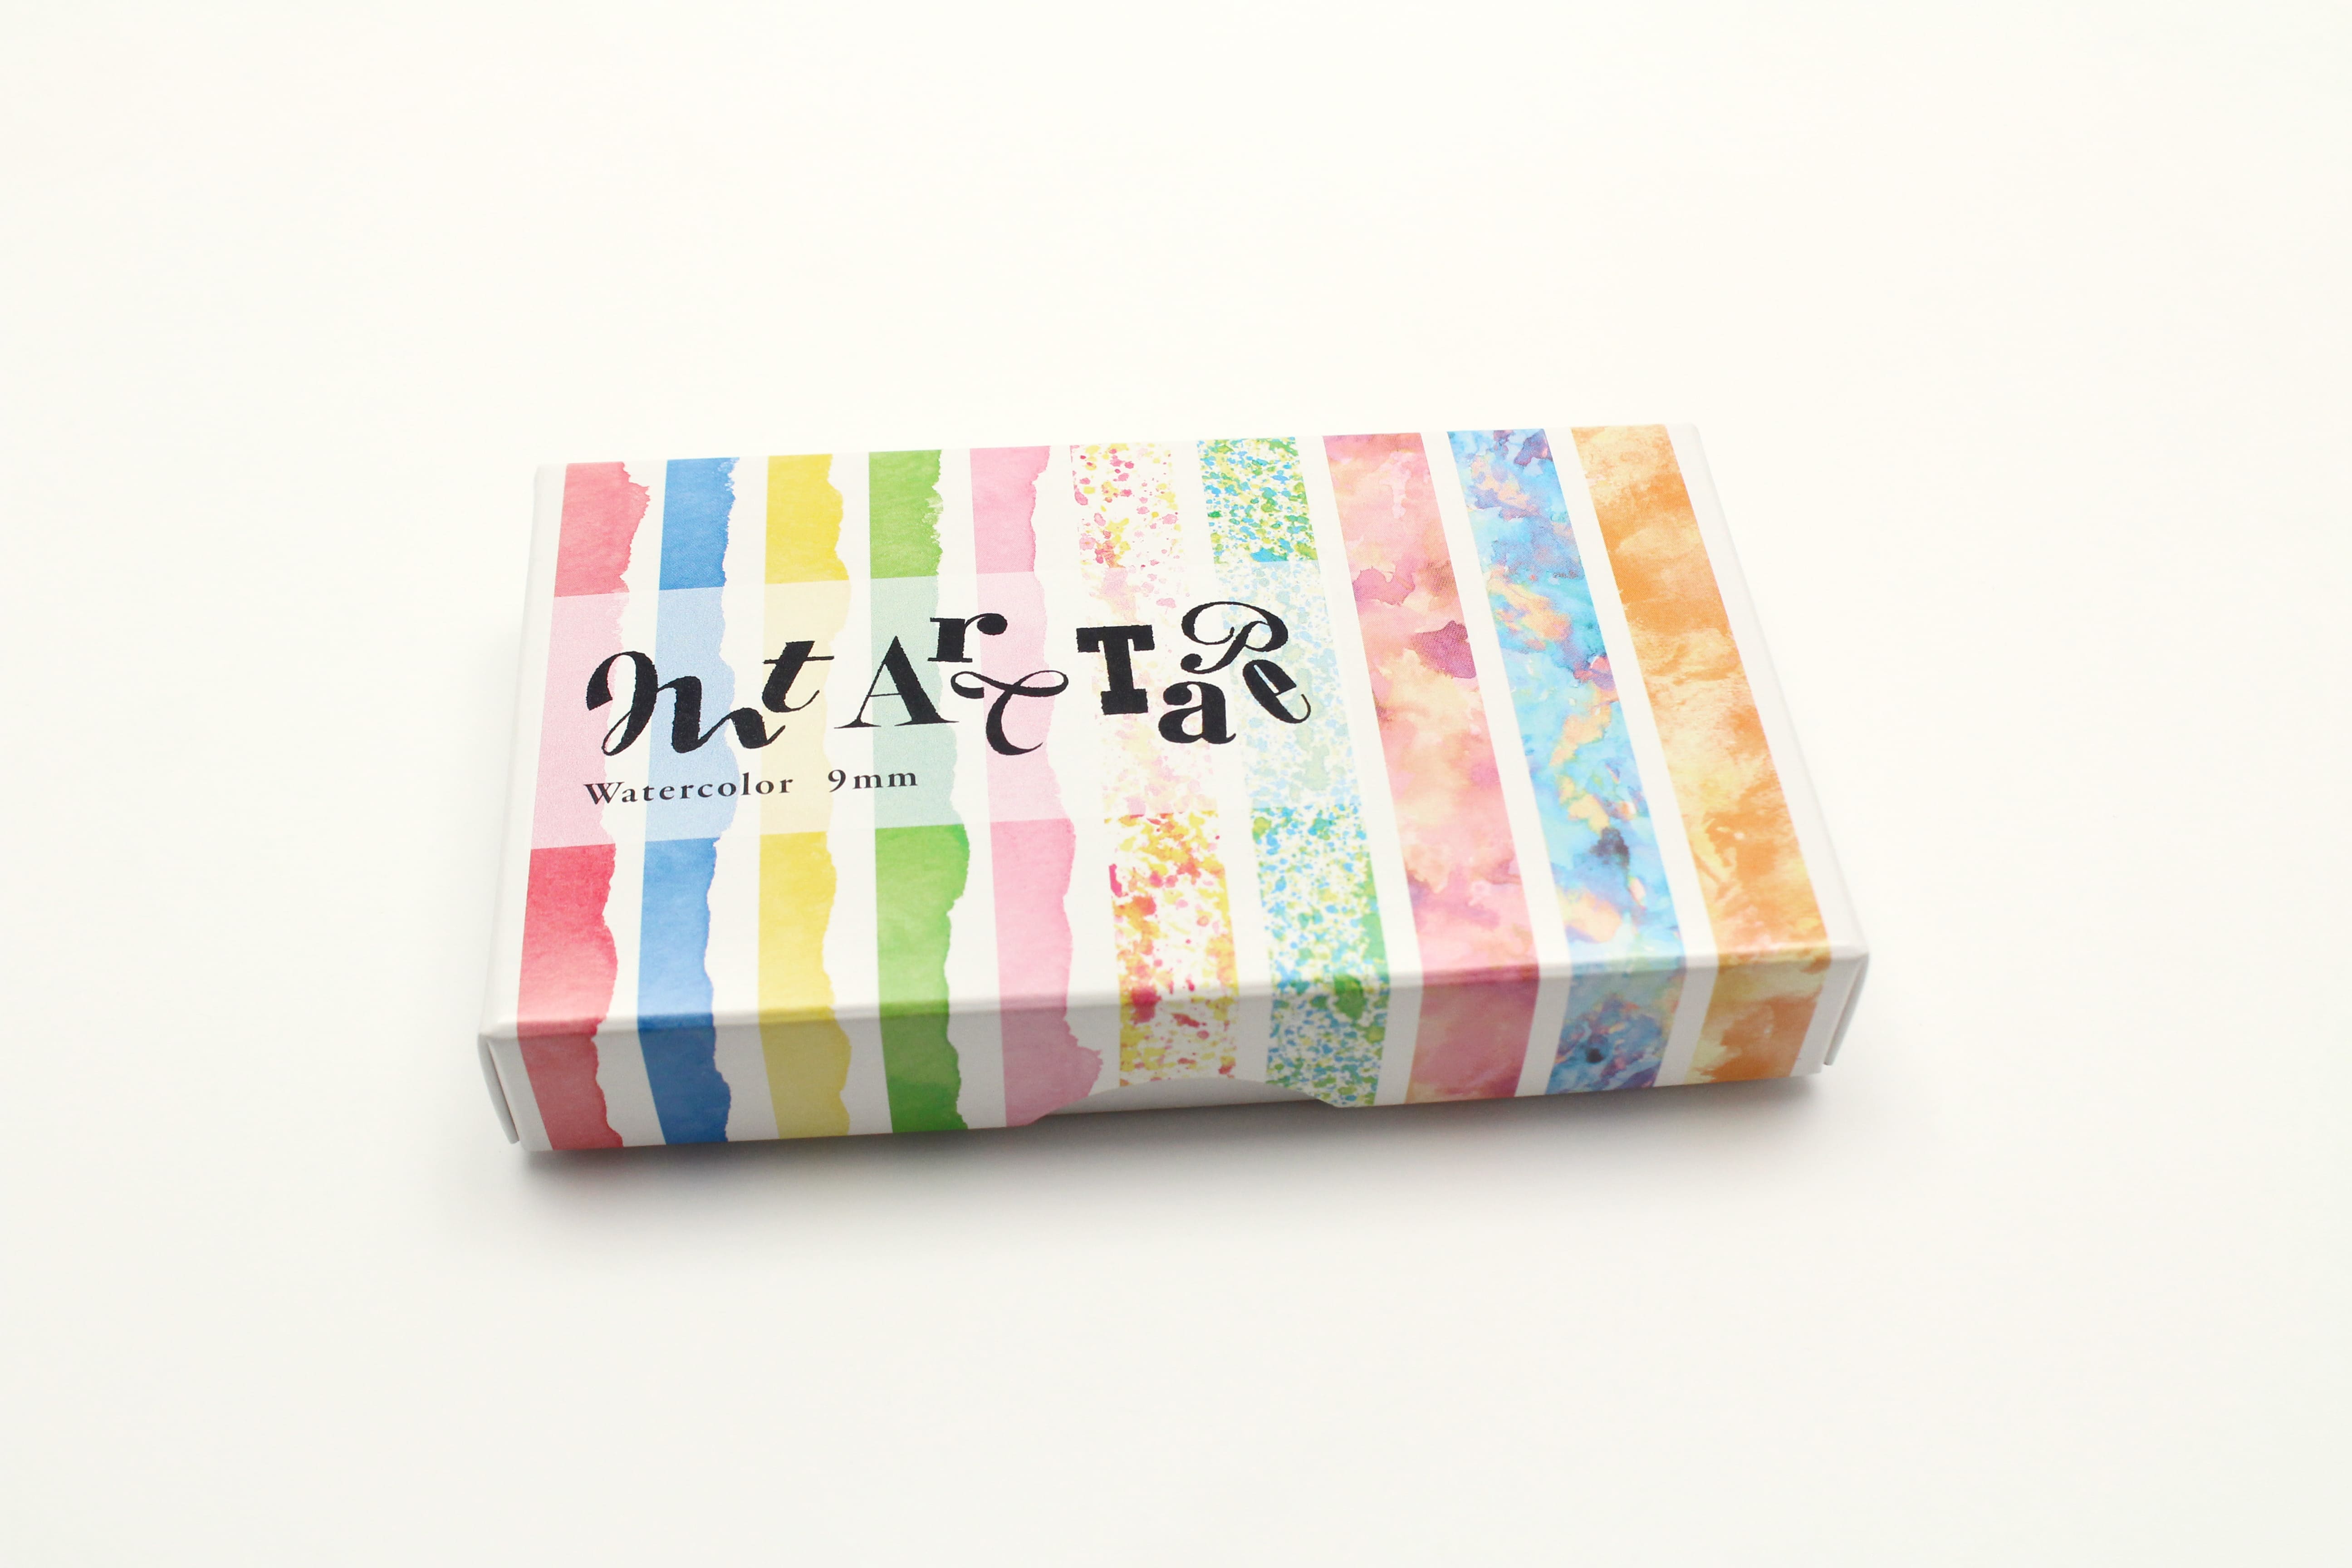 mt fab - Art Tape Watercolours - 9mm Washi Tape Set of 10